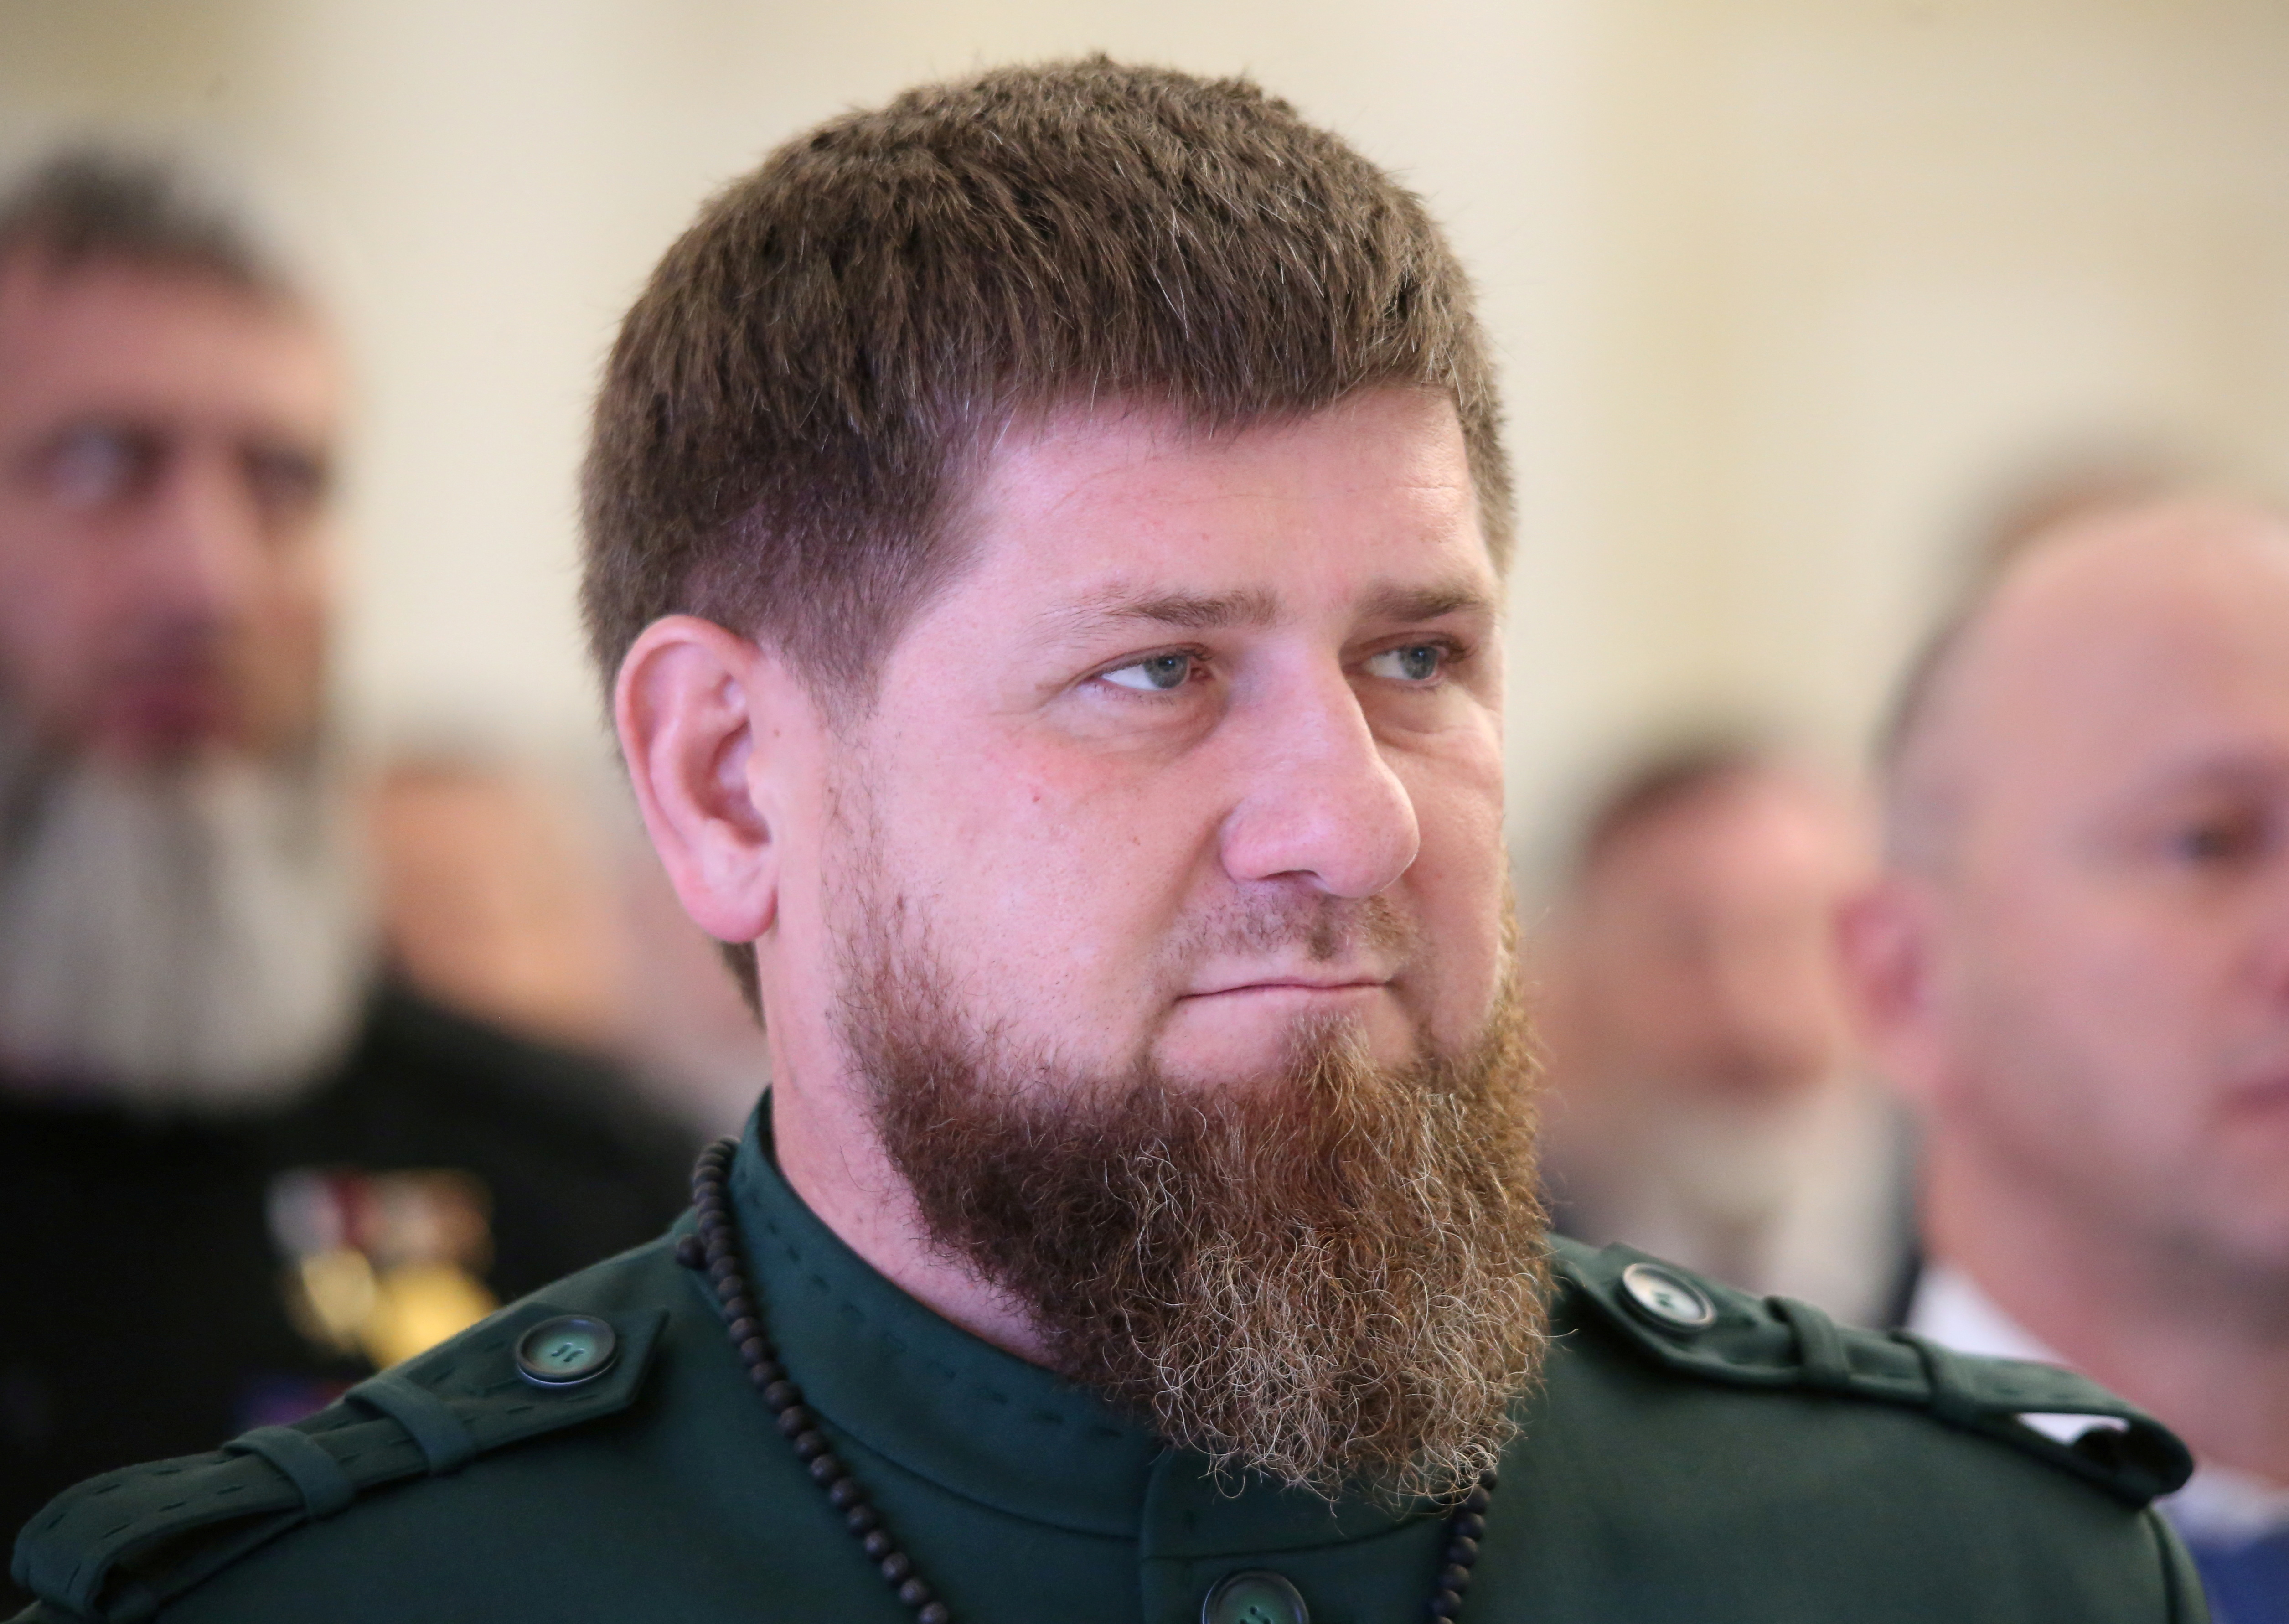 Head of the Chechen Republic Ramzan Kadyrov attends an inauguration ceremony in Grozny